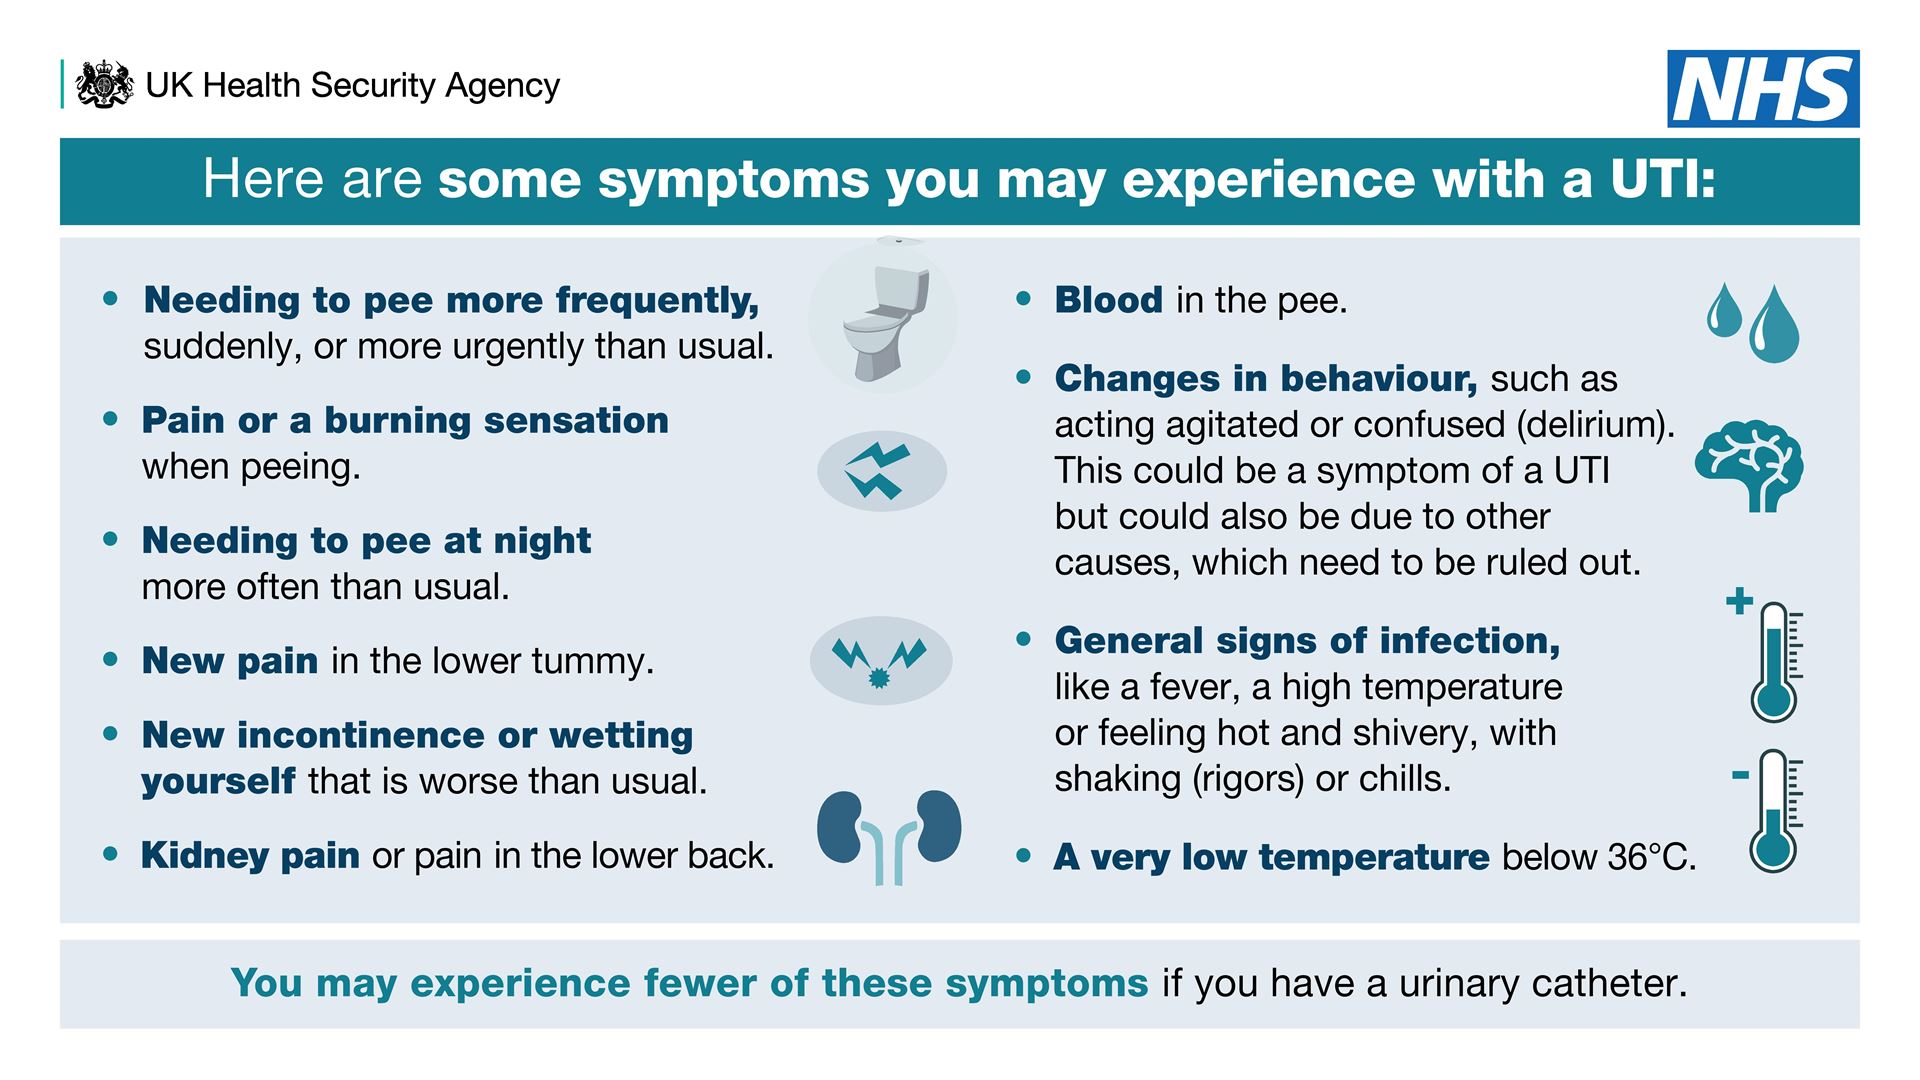 Symptoms of a UTI